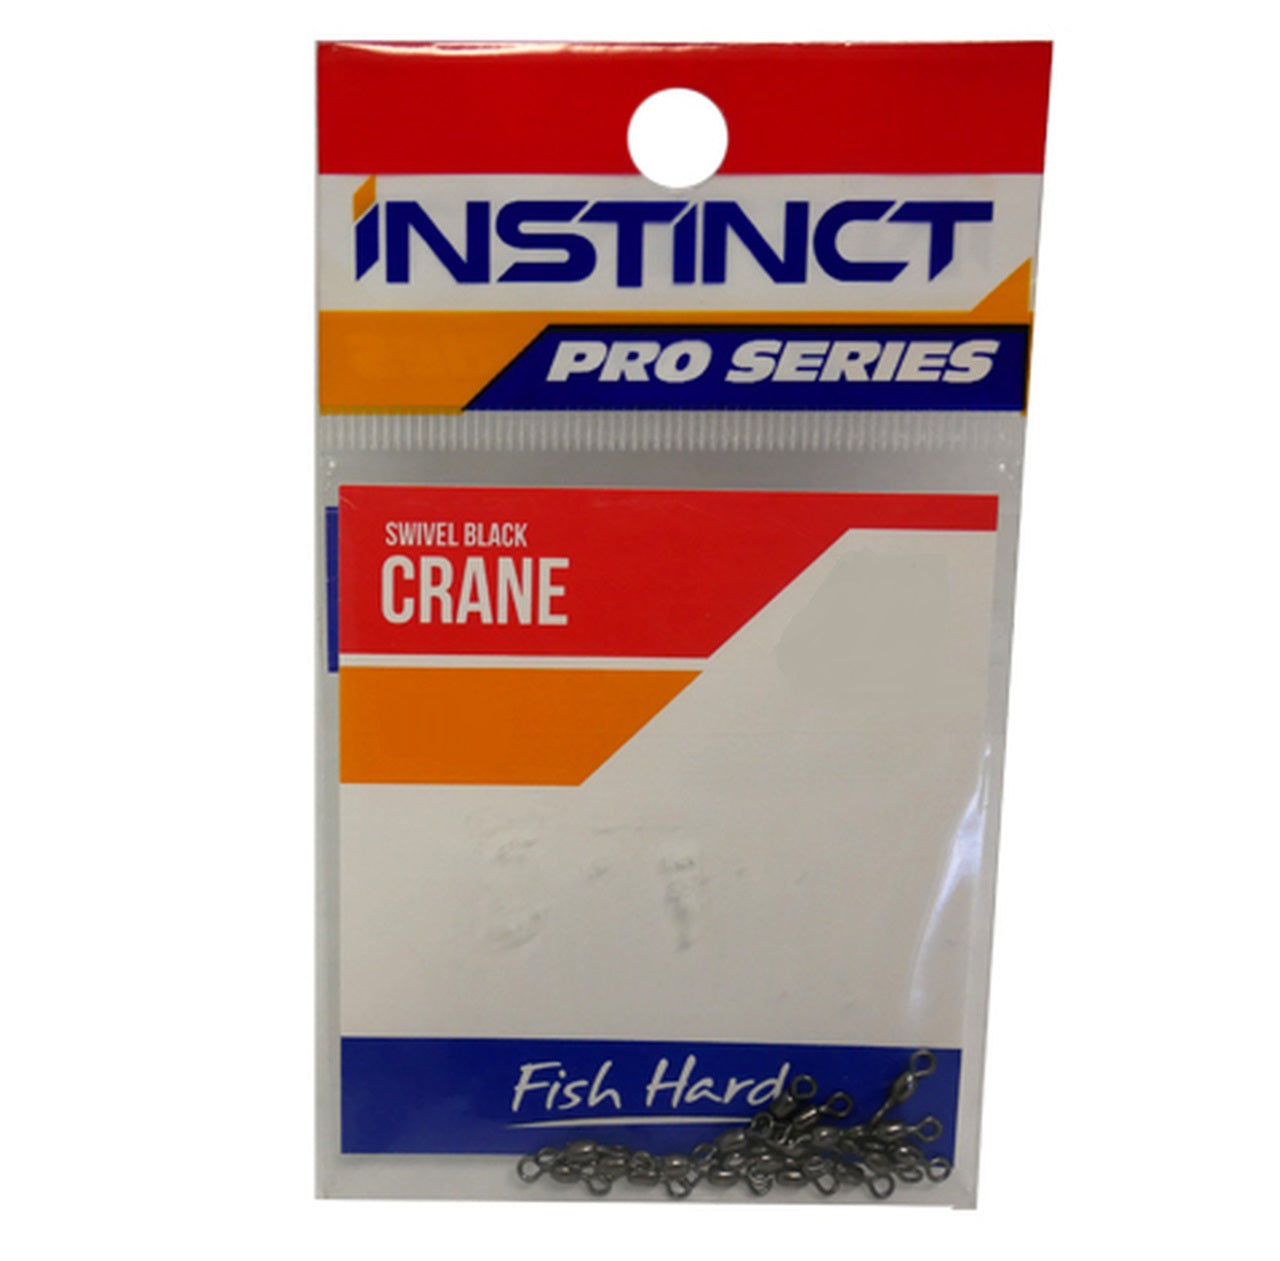 Instinct Pro Series IN204 Black Crane Swivel